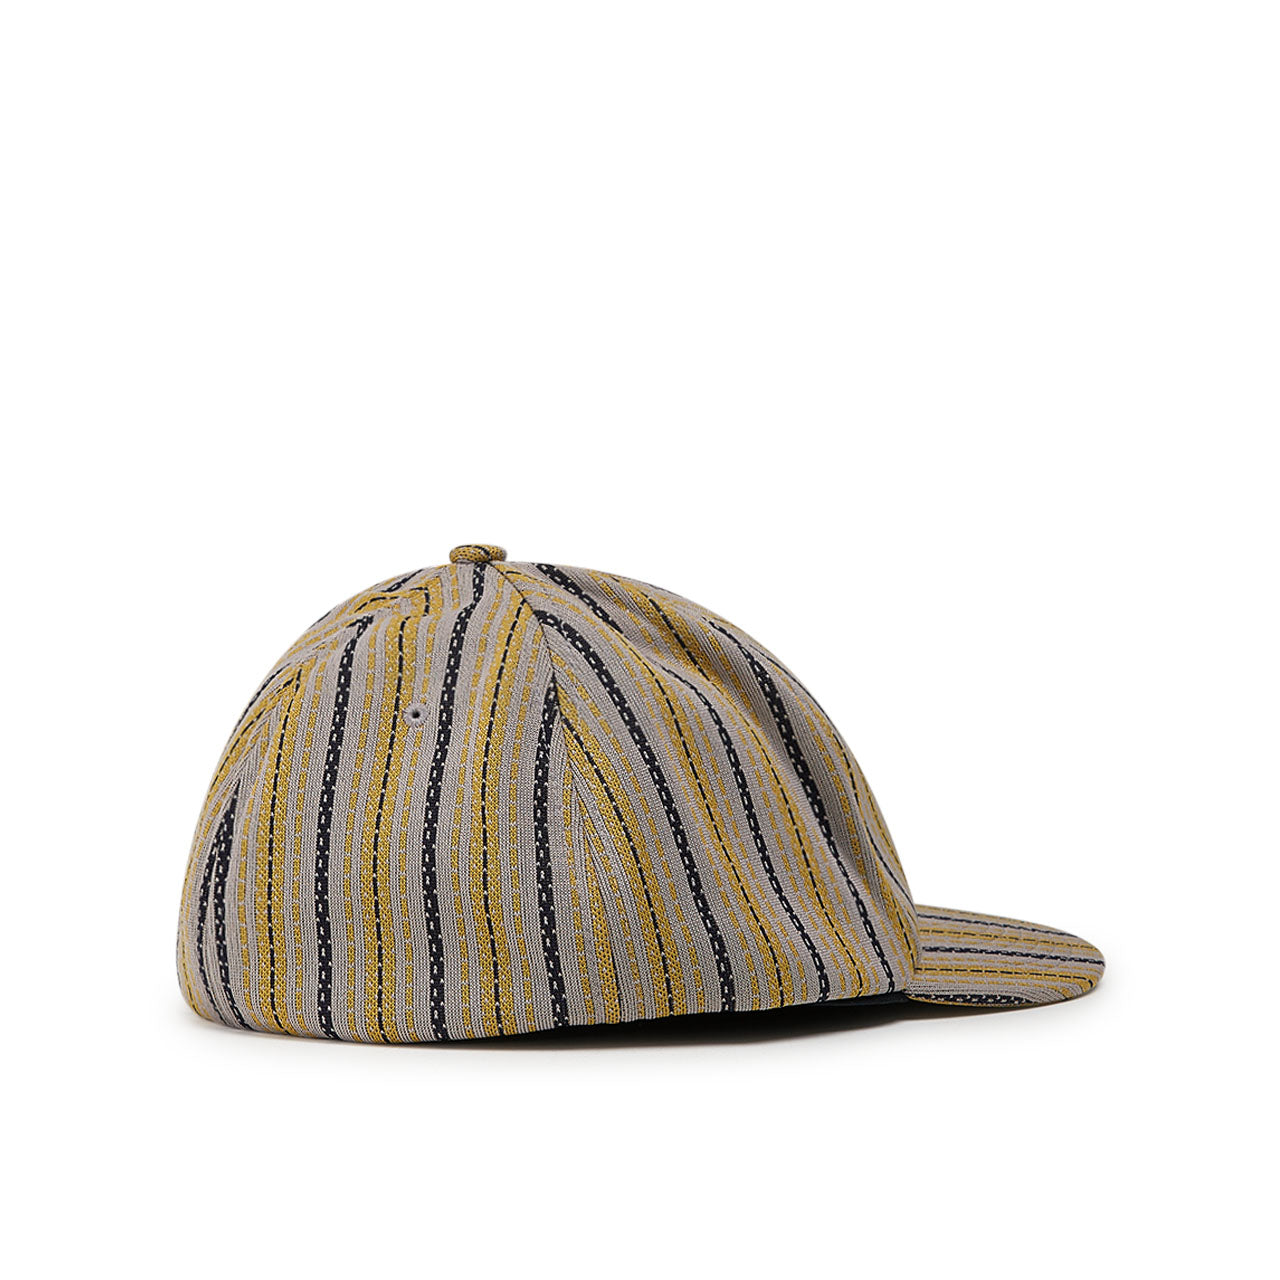 needles baseball cap (yellow / grey)